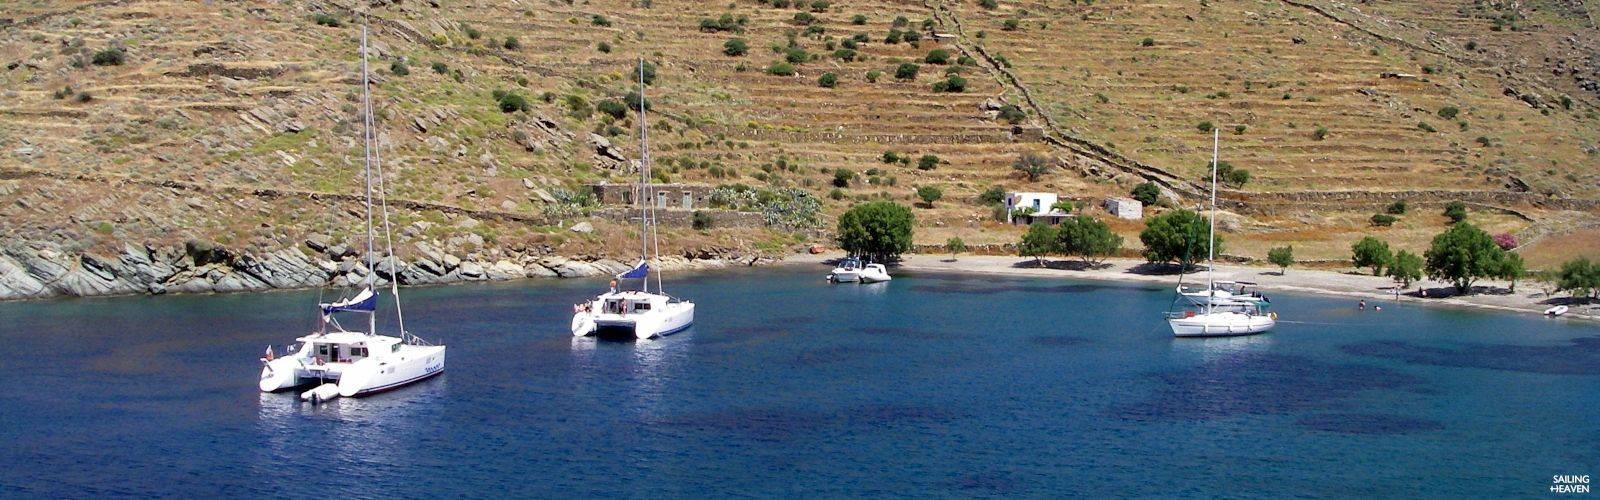 Spensierate vacanze in barca a vela alle isole greche